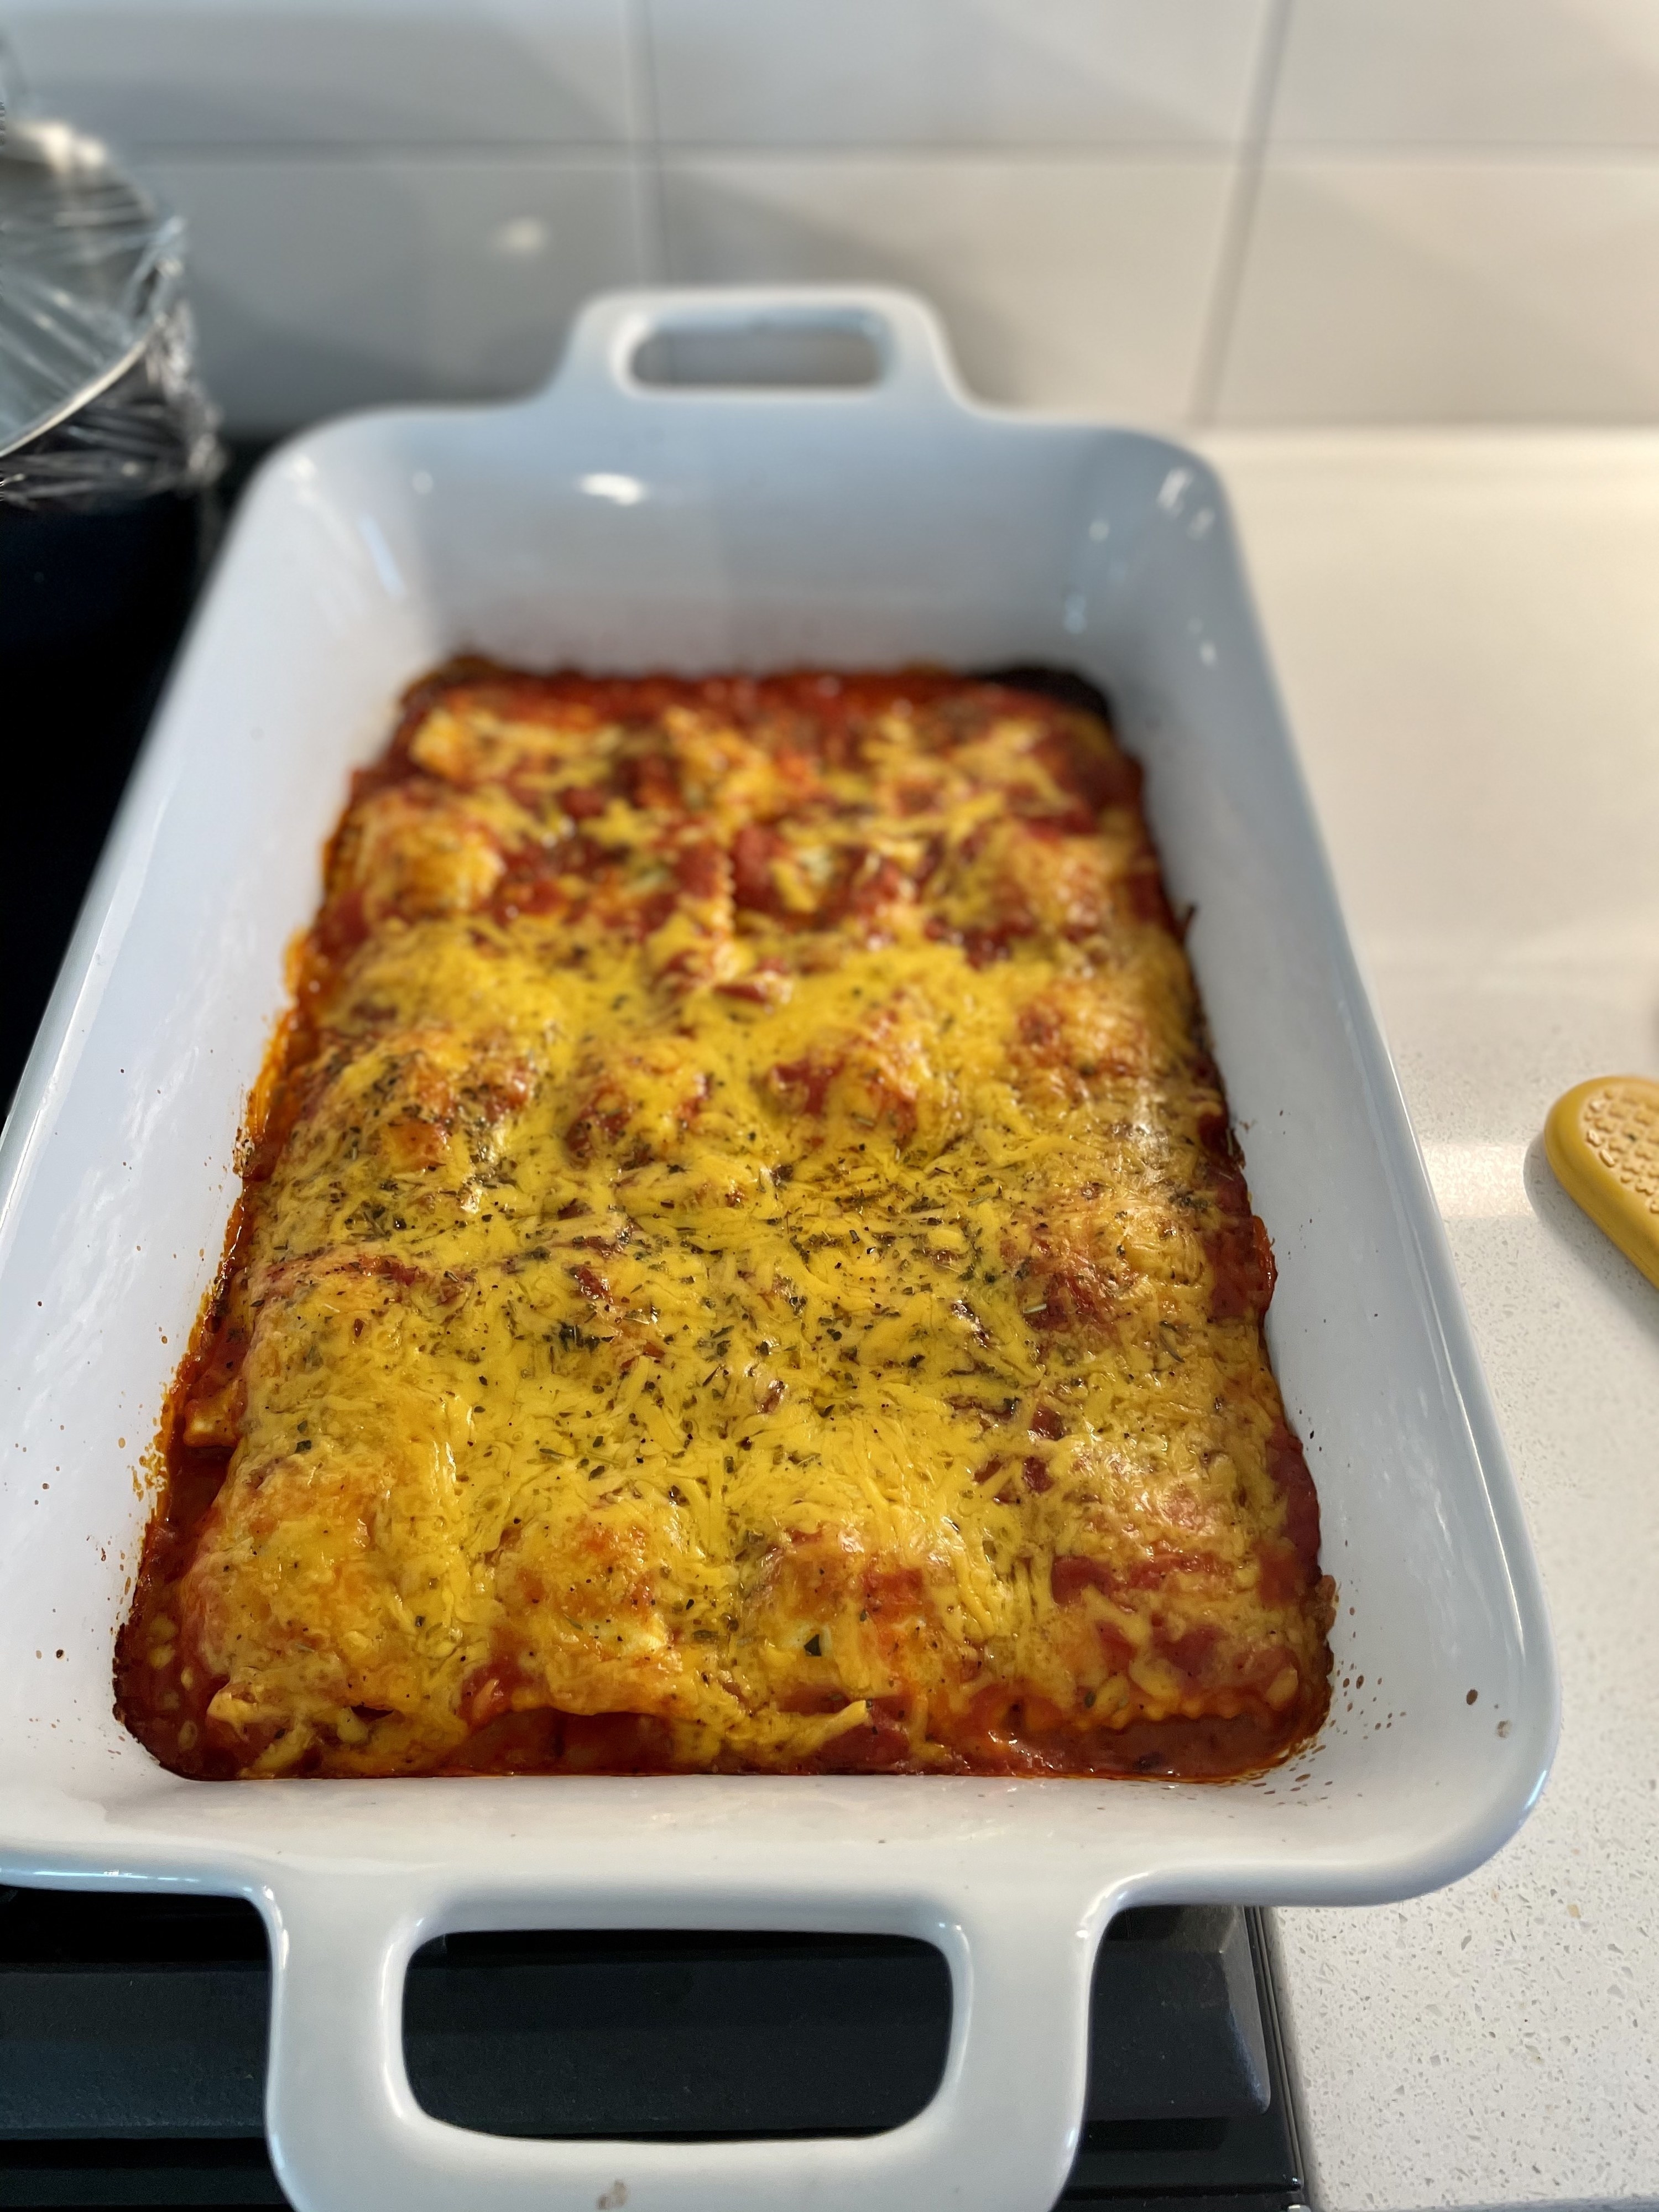 Homemade cheesy lasagna in a baking dish.